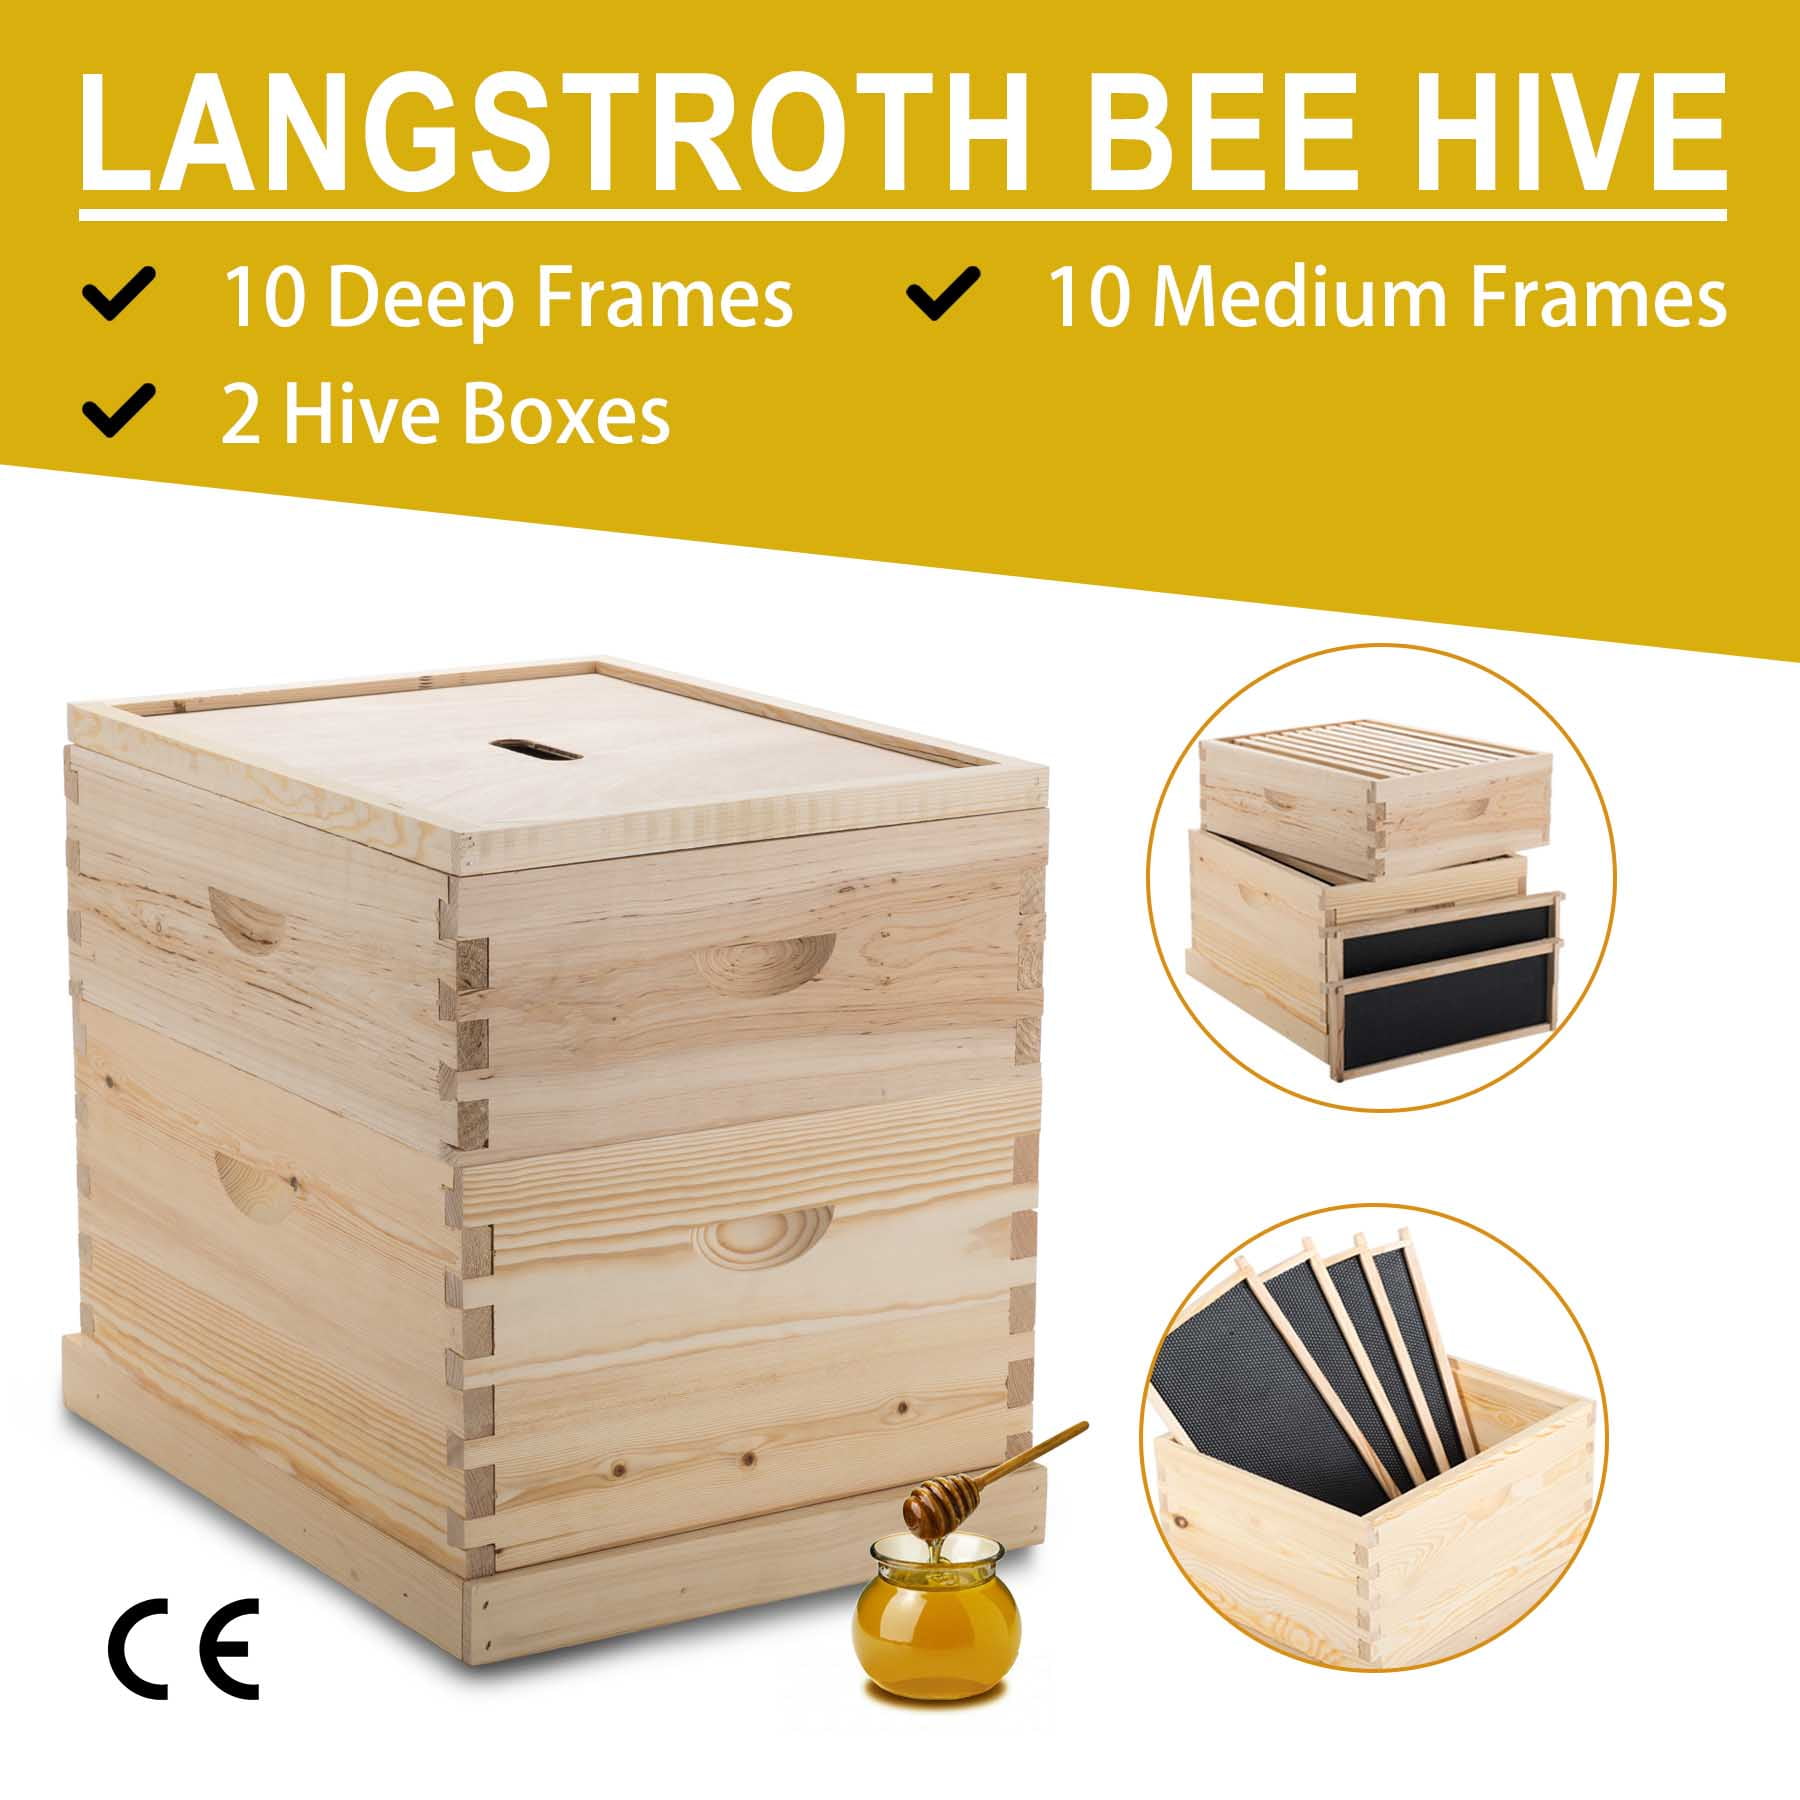 Honey Beehive Frames Beekeeping Box Bee Hive King Pollination Box Bee M Y0O7 1X 